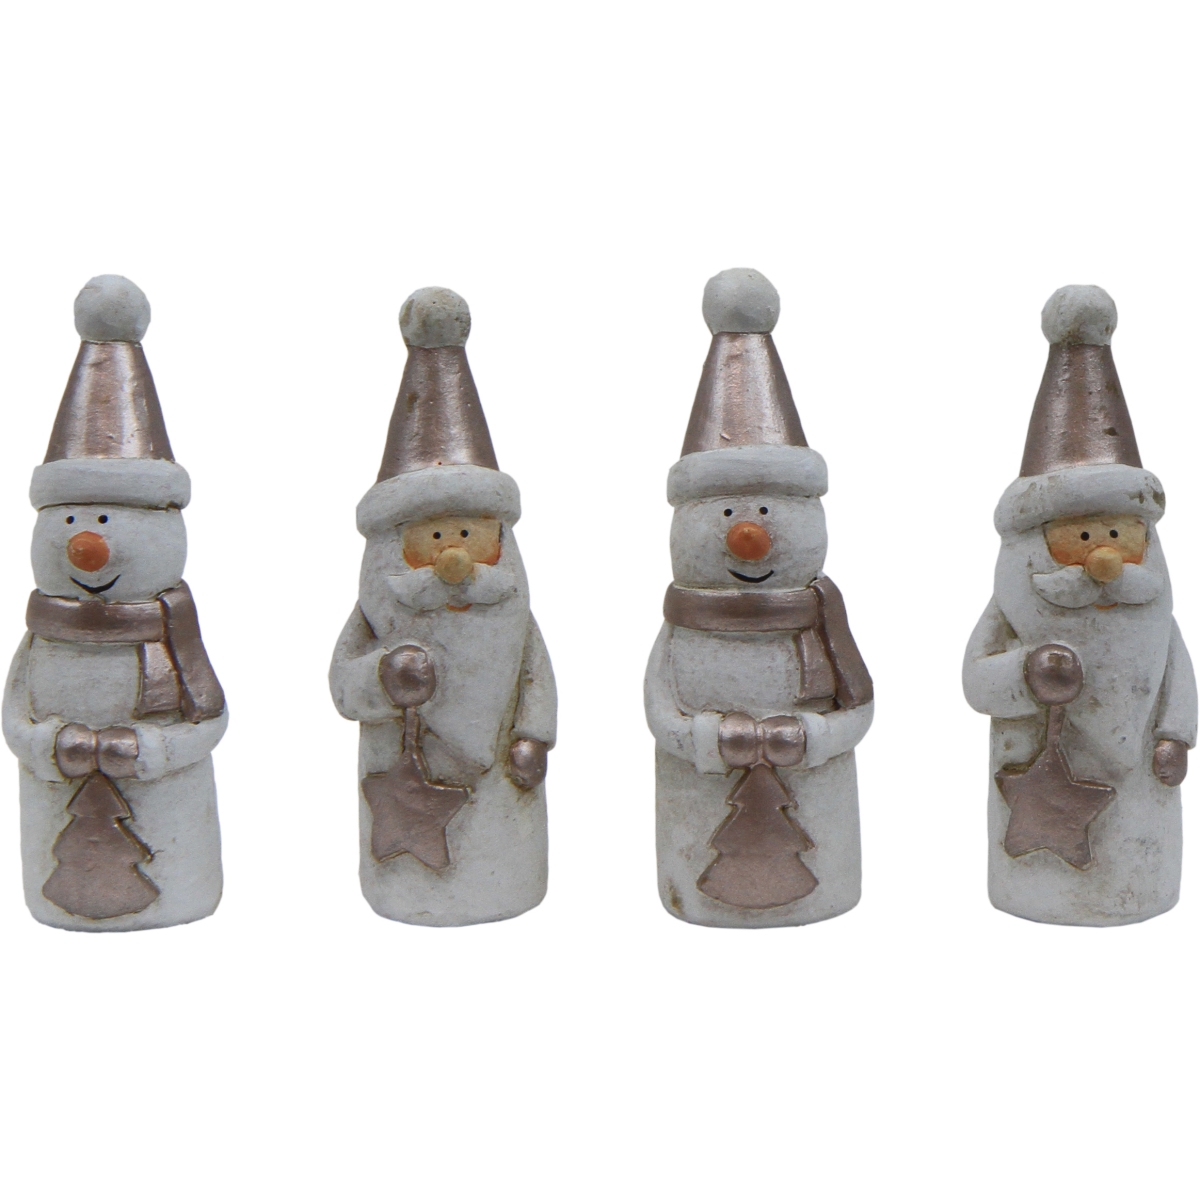 Picture of Forpost FP-PMDF-235 Papier Mache Snowmen & Santa in Hats Figurine - Set of 4